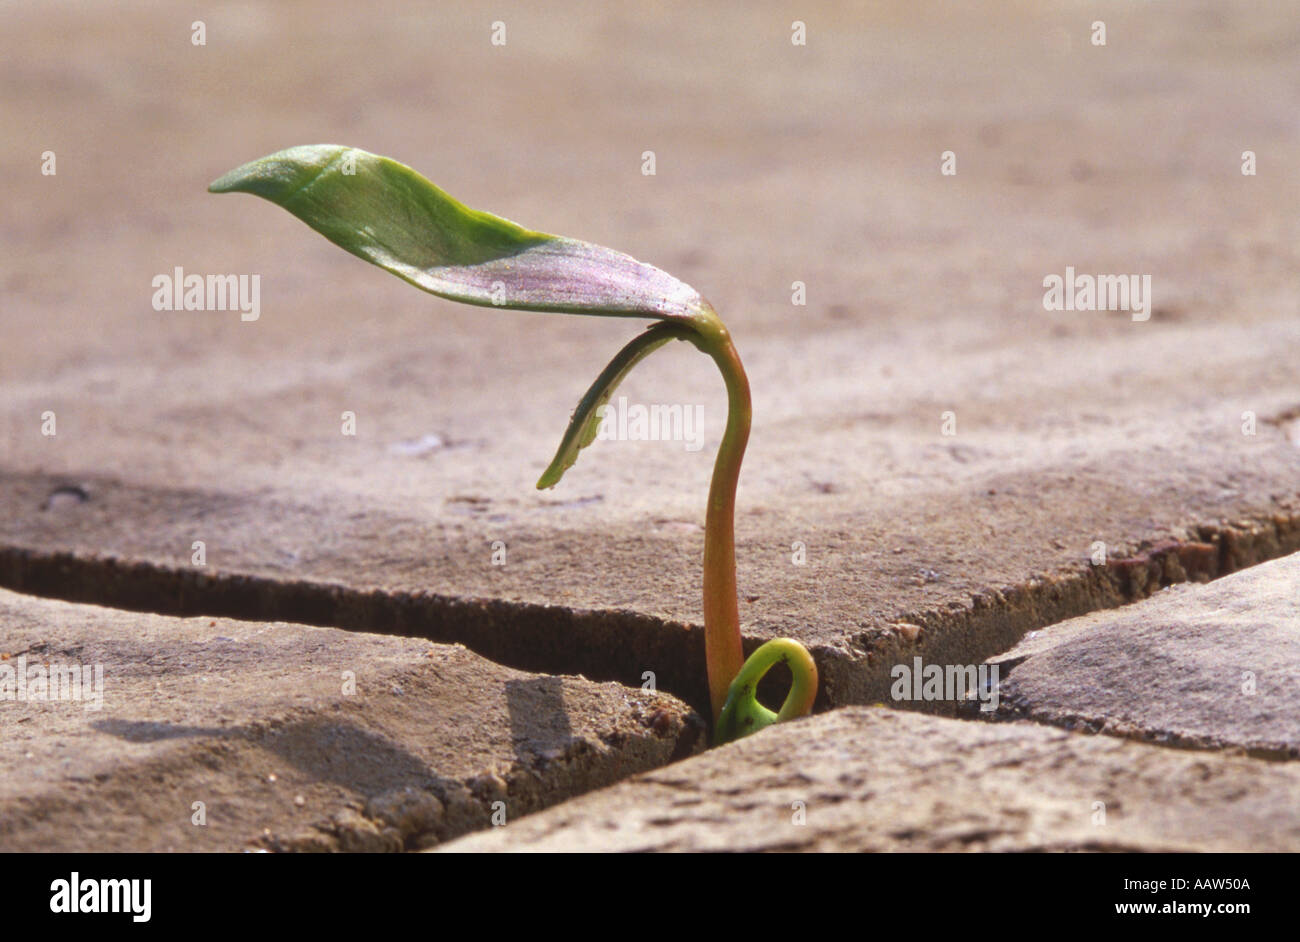 Sycamore Seedling Growing Between Paving Slabs Stock Photo